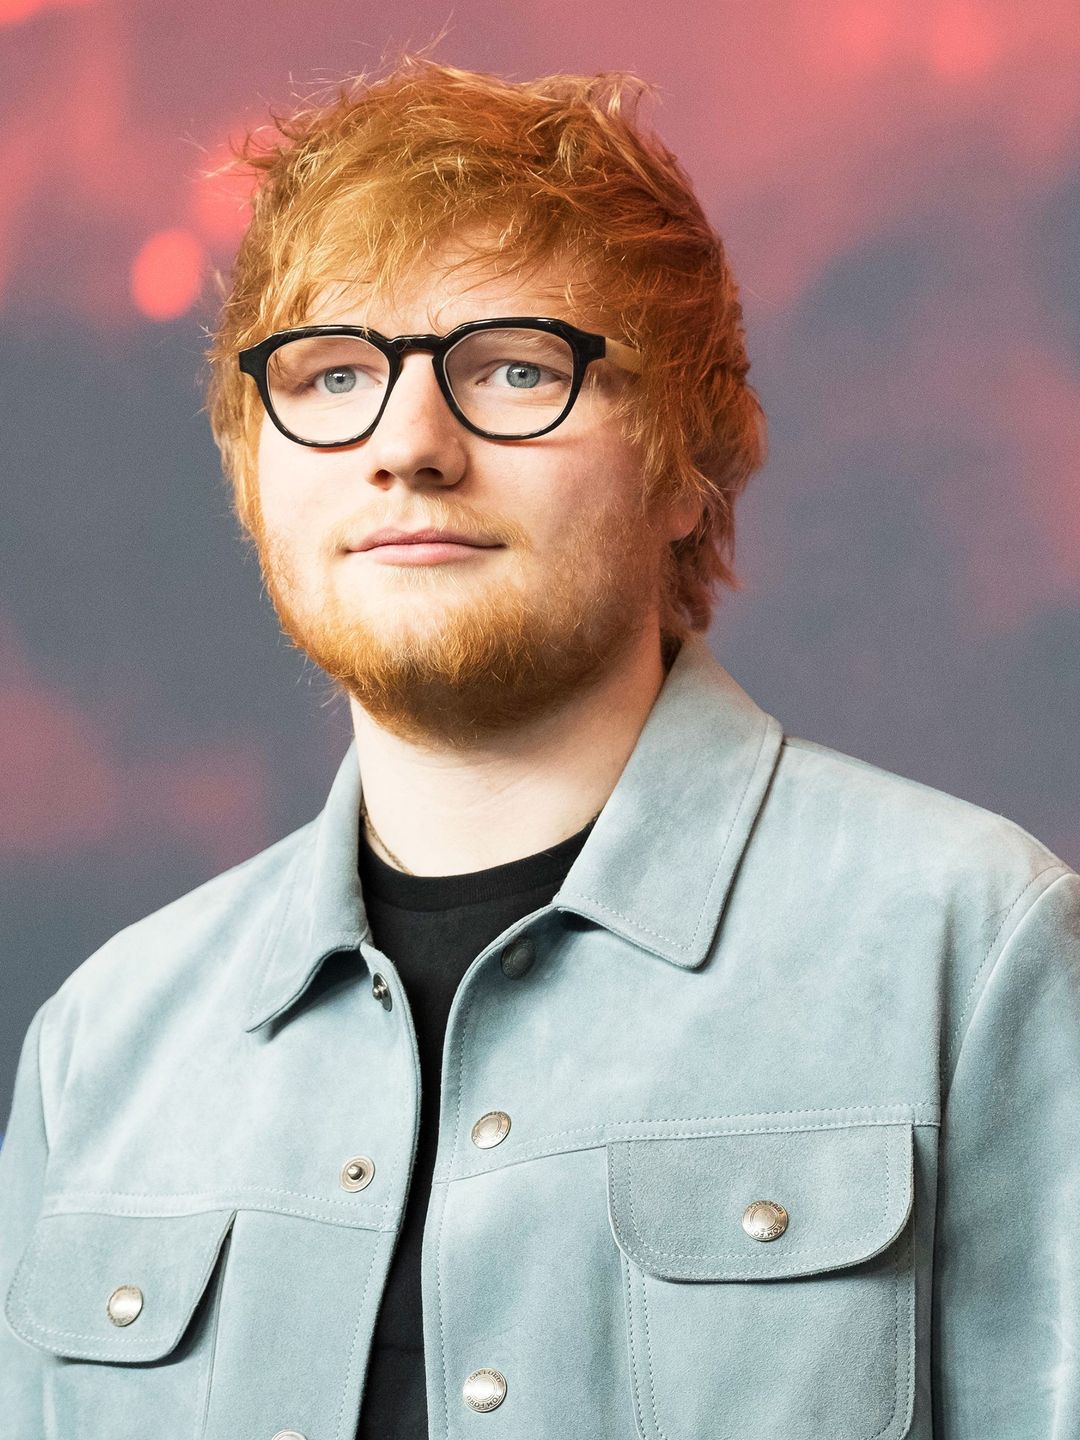 Ed Sheeran who are his parents